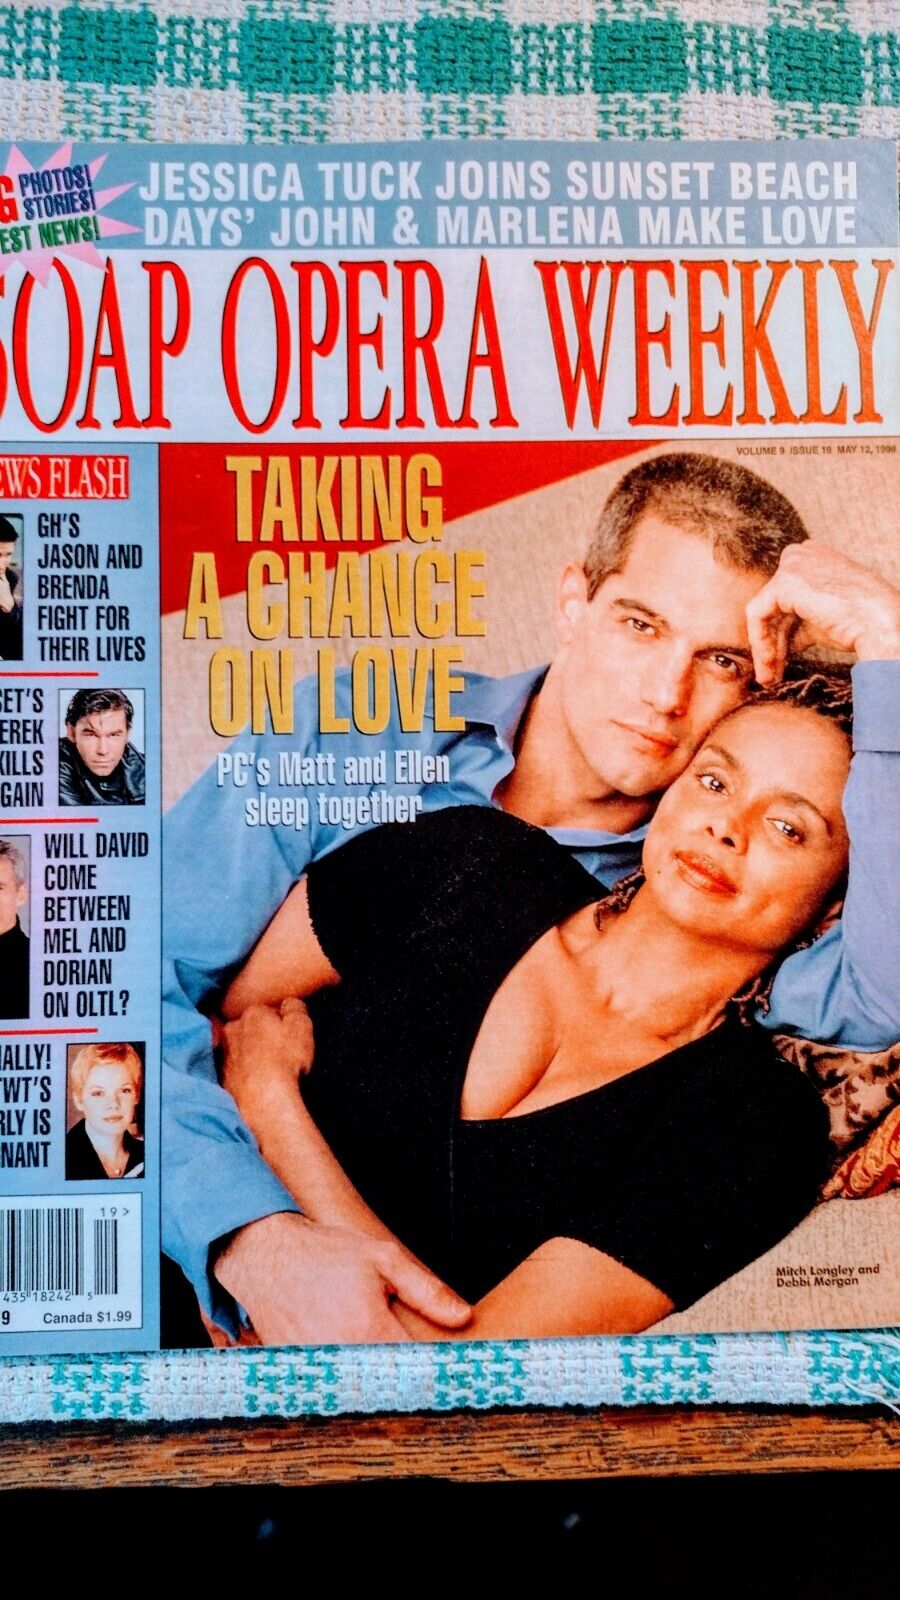 SOAP OPERA WEEKLY MAY 12,1998 TAKING A CHANCE ON LOVE. Без бренда 1047-7128 - фотография #12